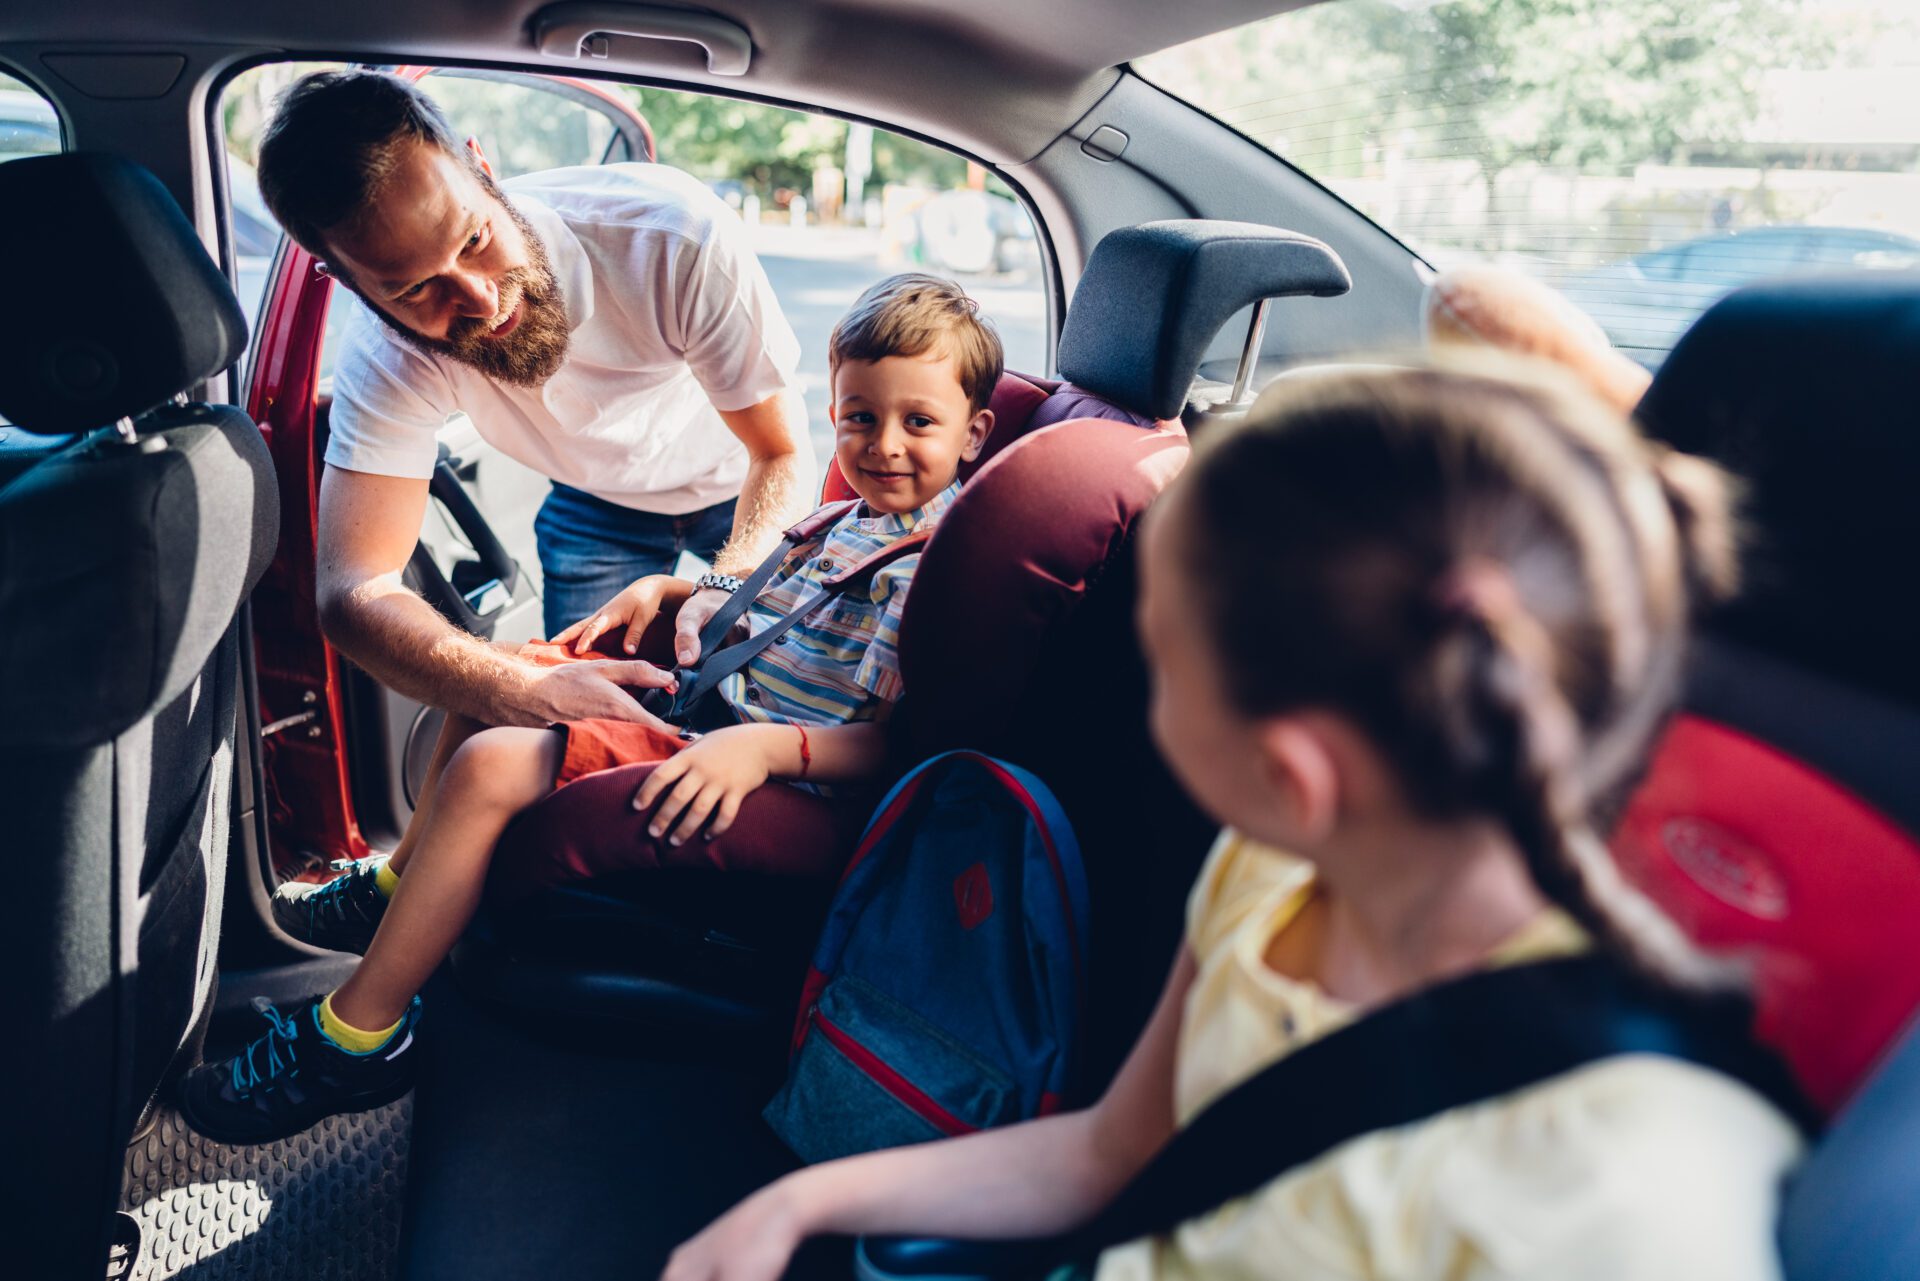 Child car seats, restraints and seat belts